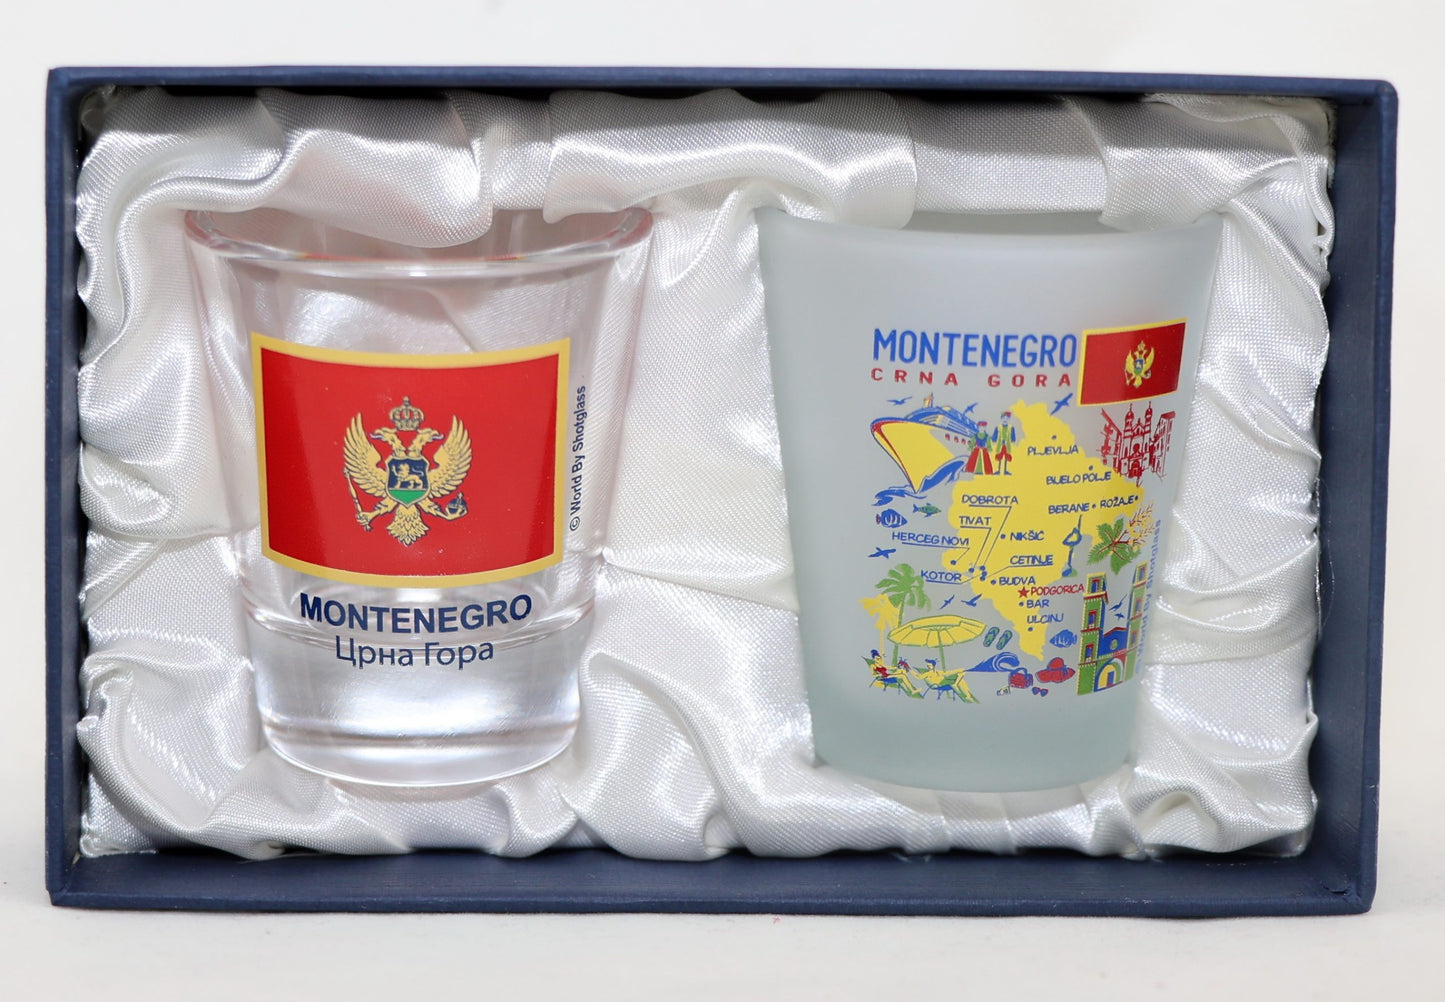 Montenegro Souvenir Boxed Shot Glass Set (Set of 2)